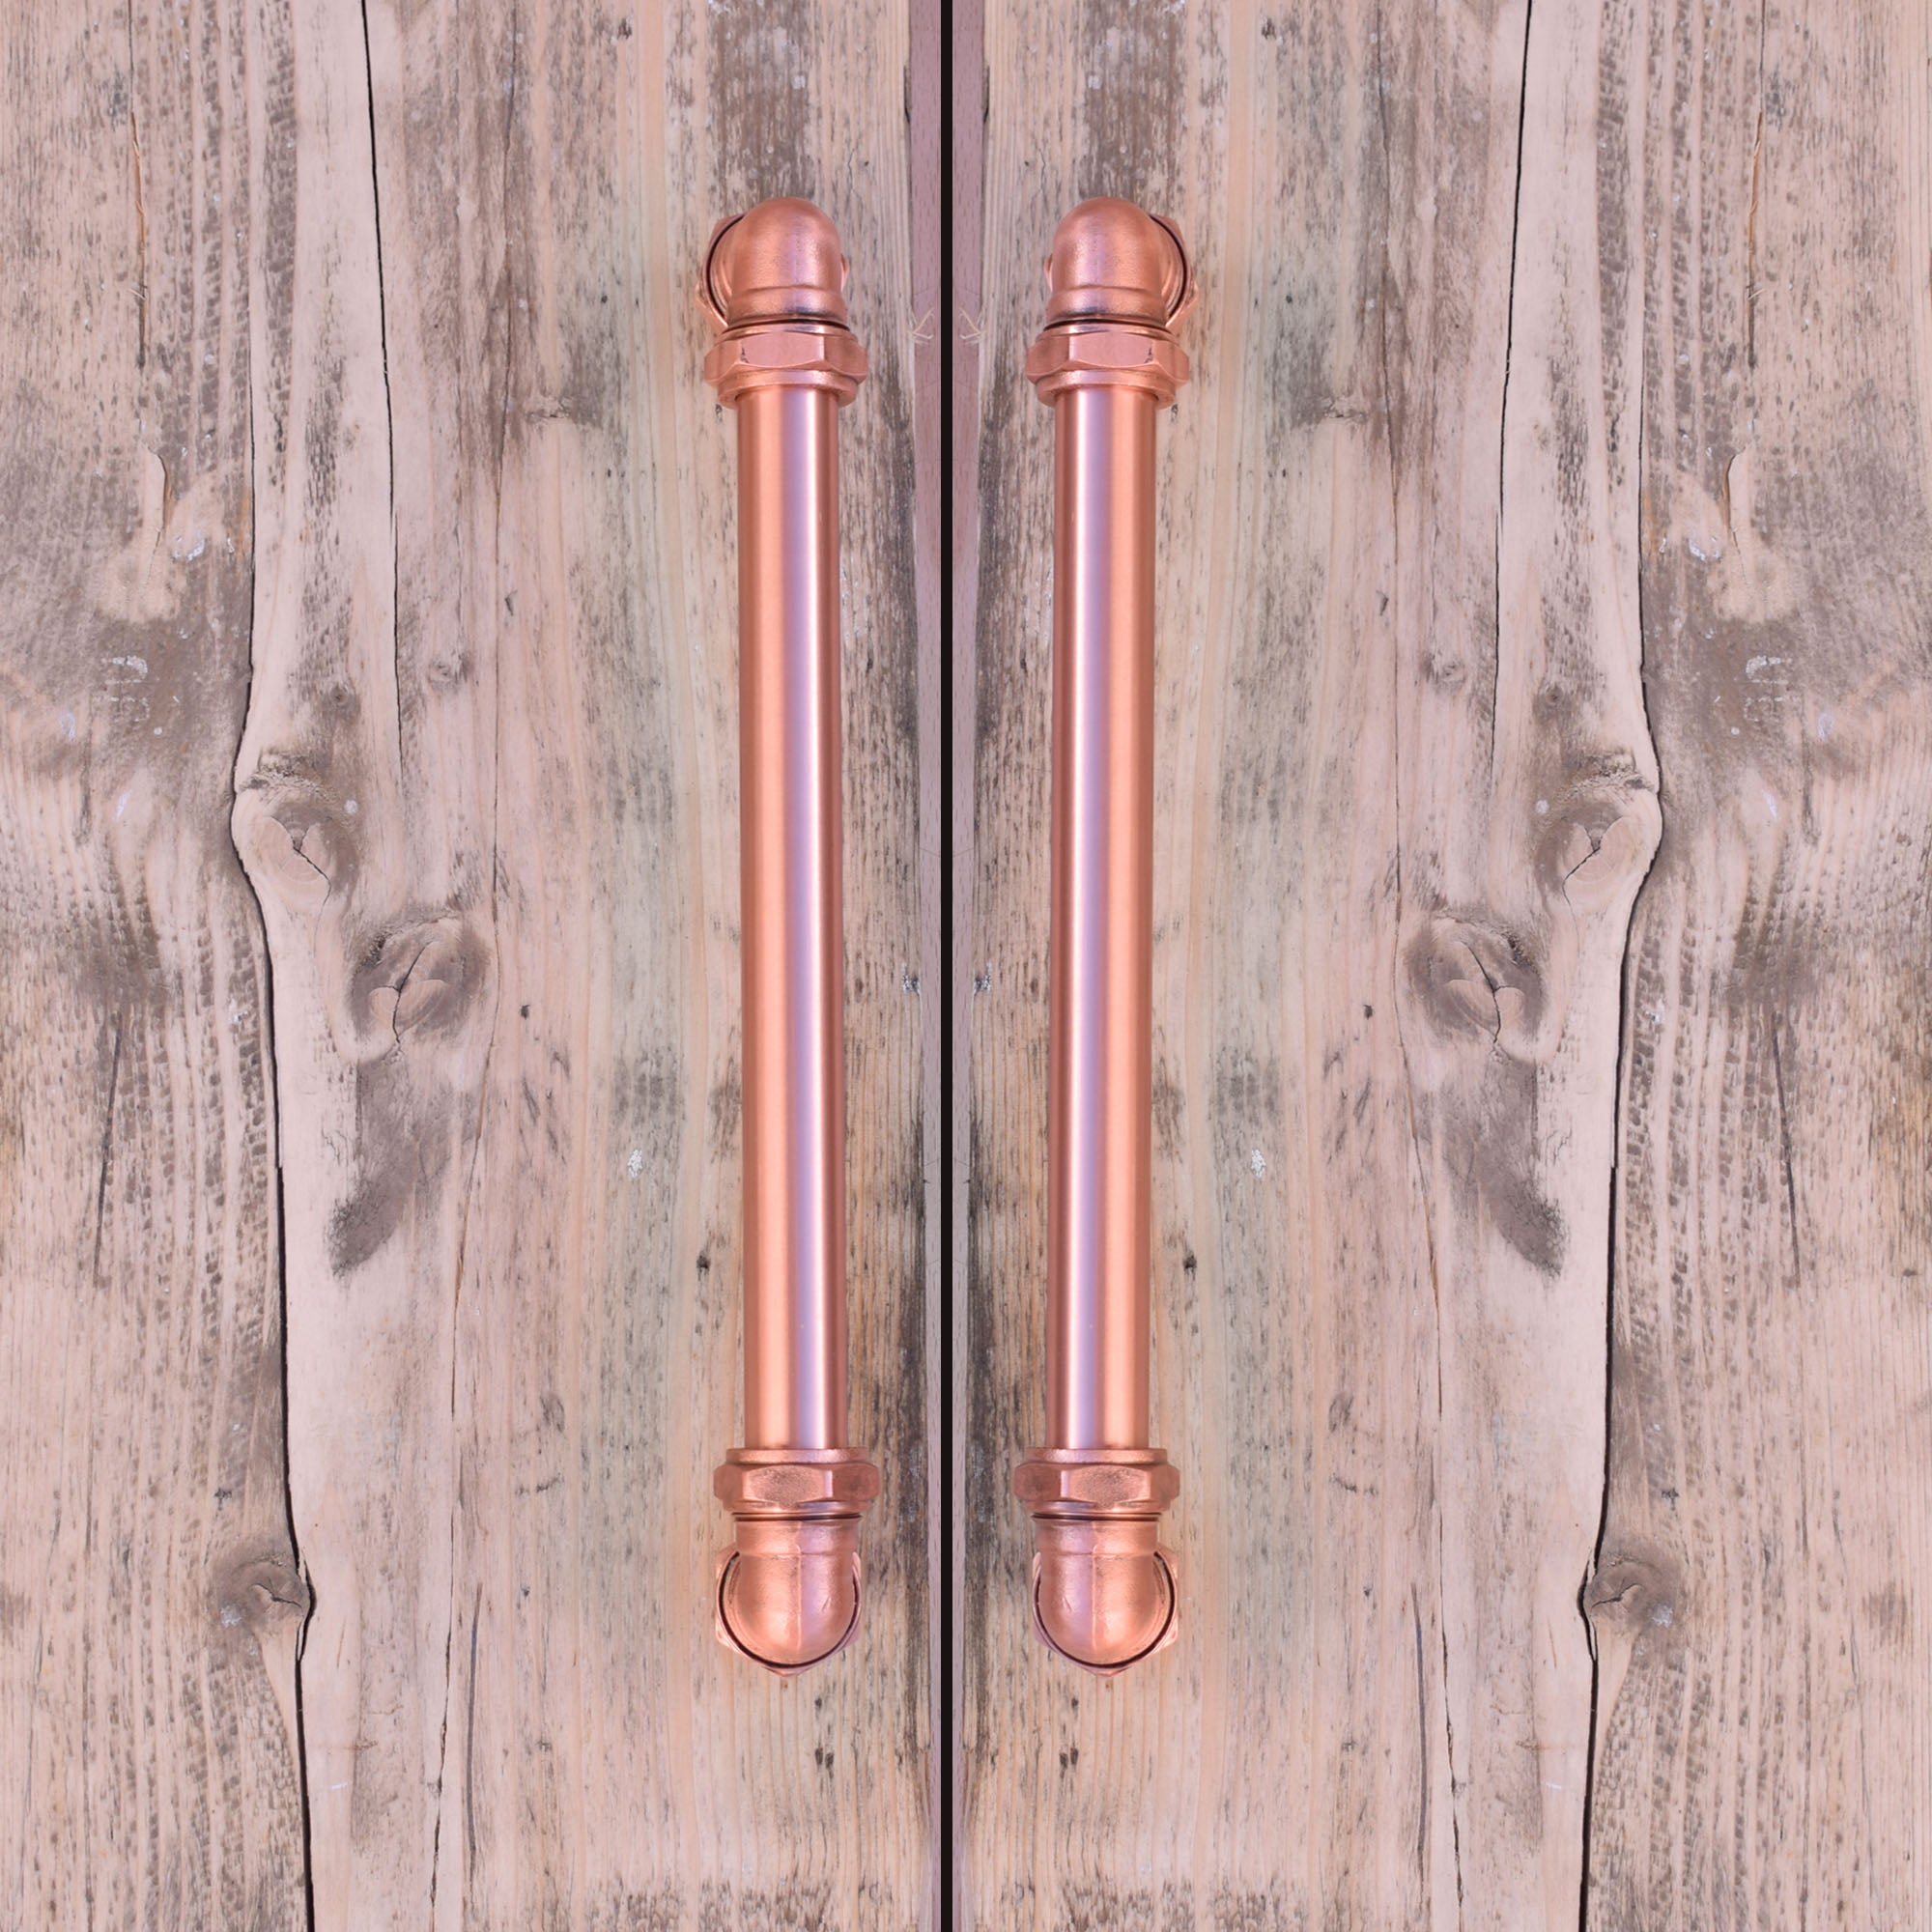 Industrial Copper Handle with Bolt Ends - Proper Copper Design